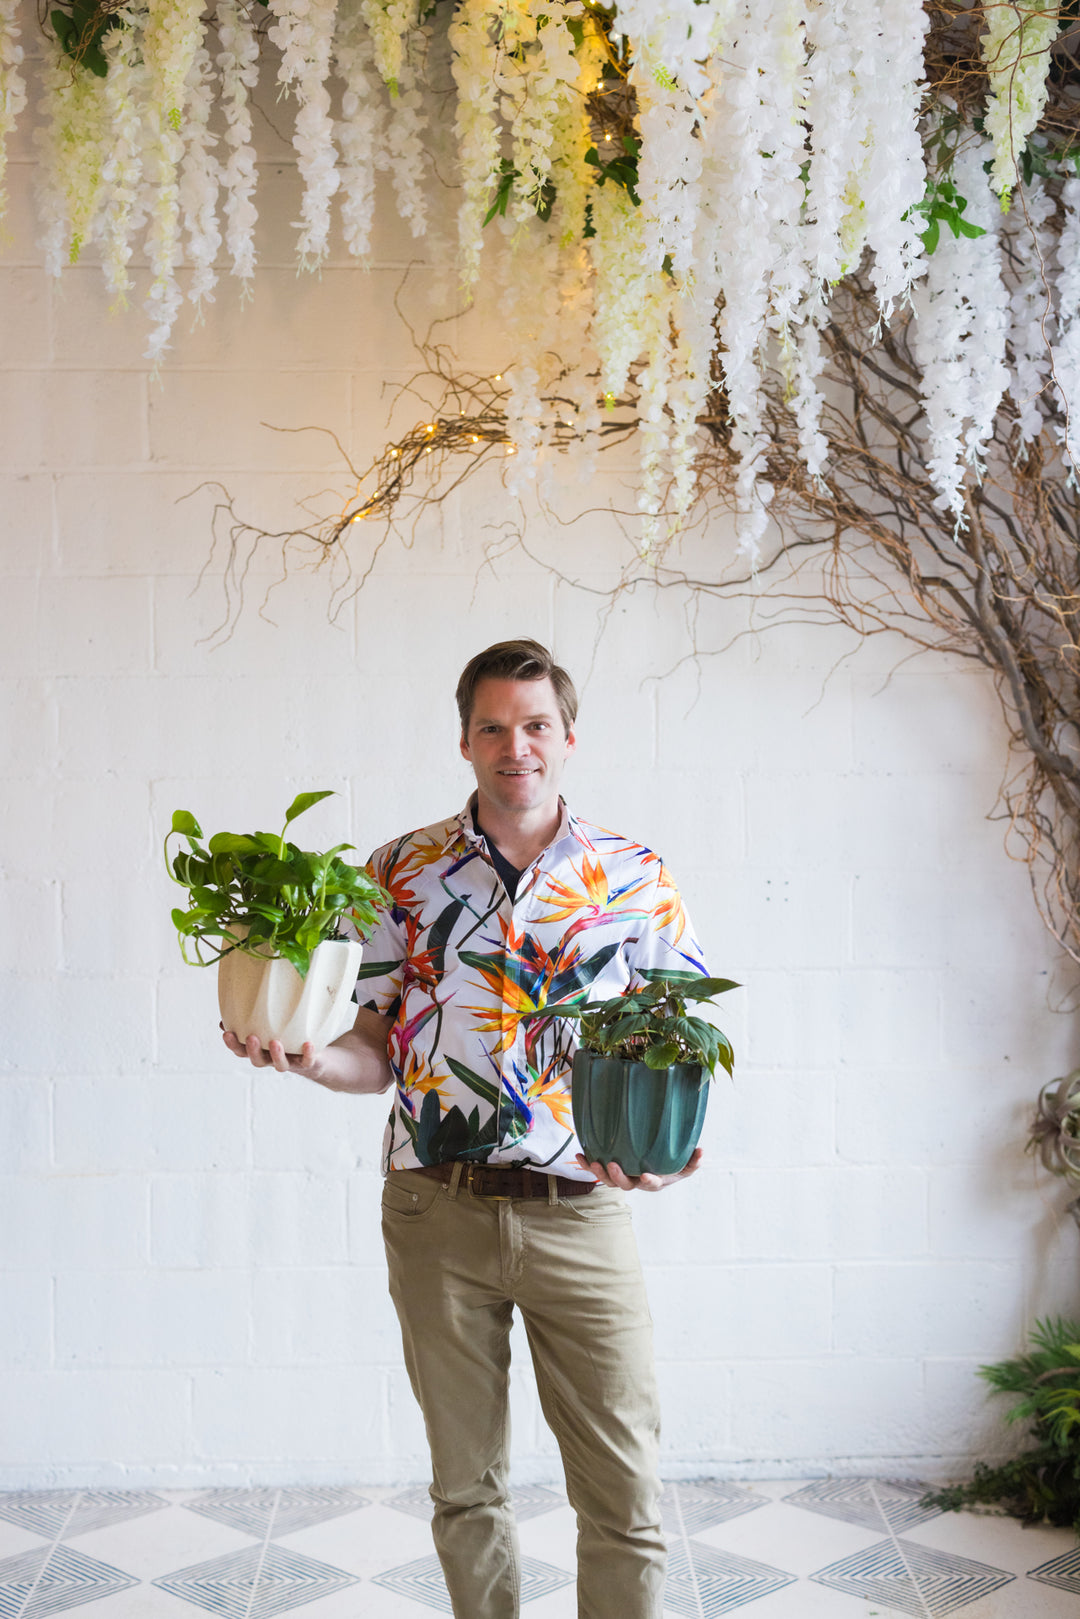 Photo of Michael Studio Director holding two plants